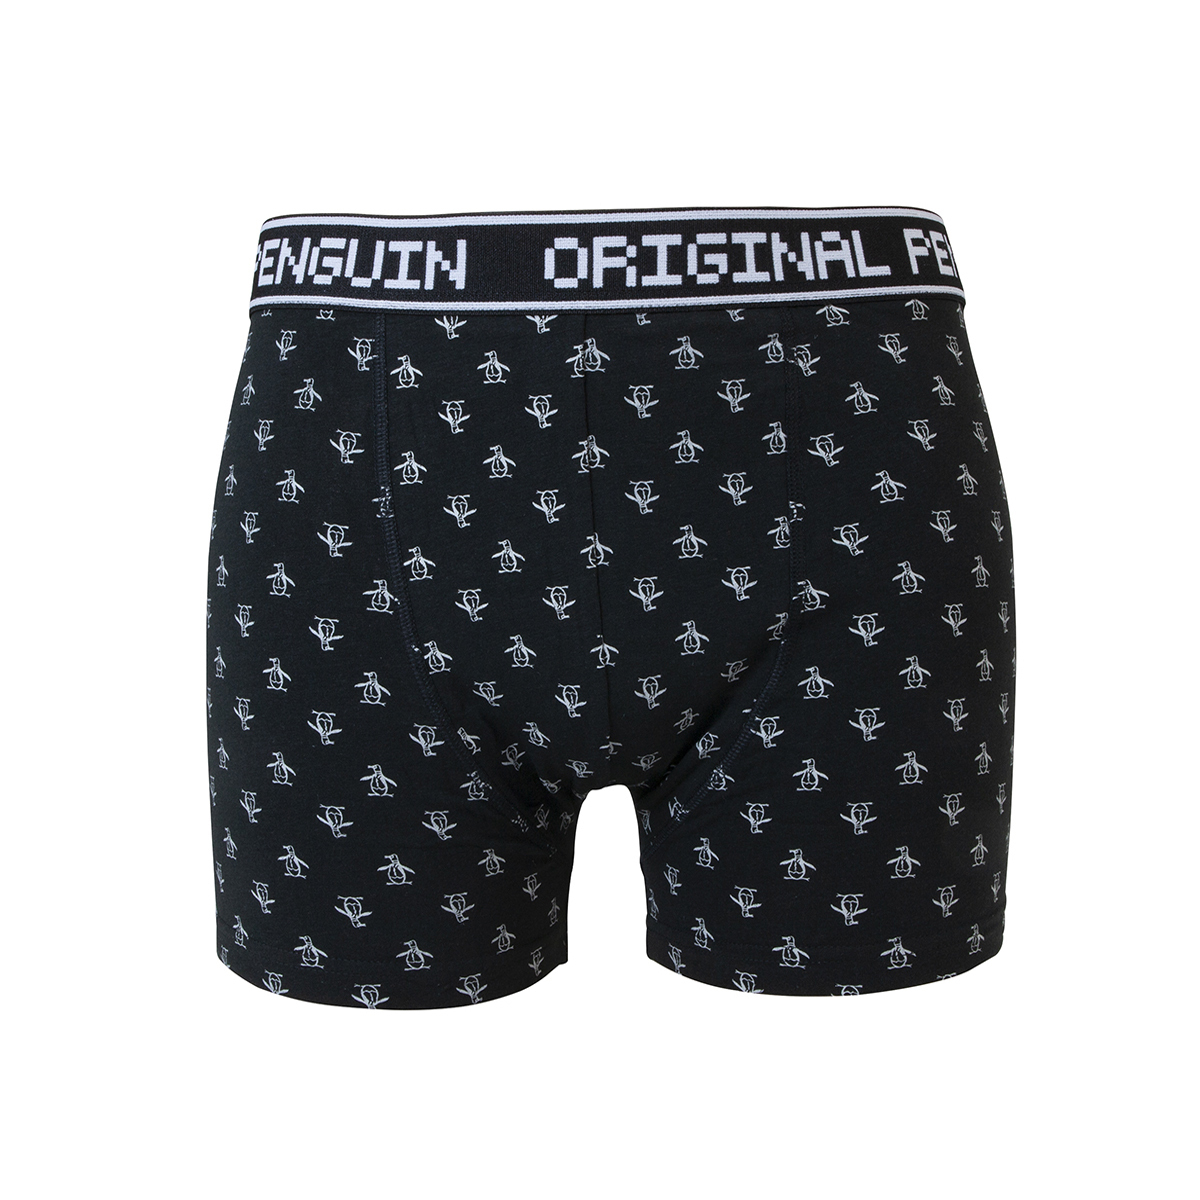 Original Penguin Men's 4 Pack Boxer Shorts in Black | Costco UK